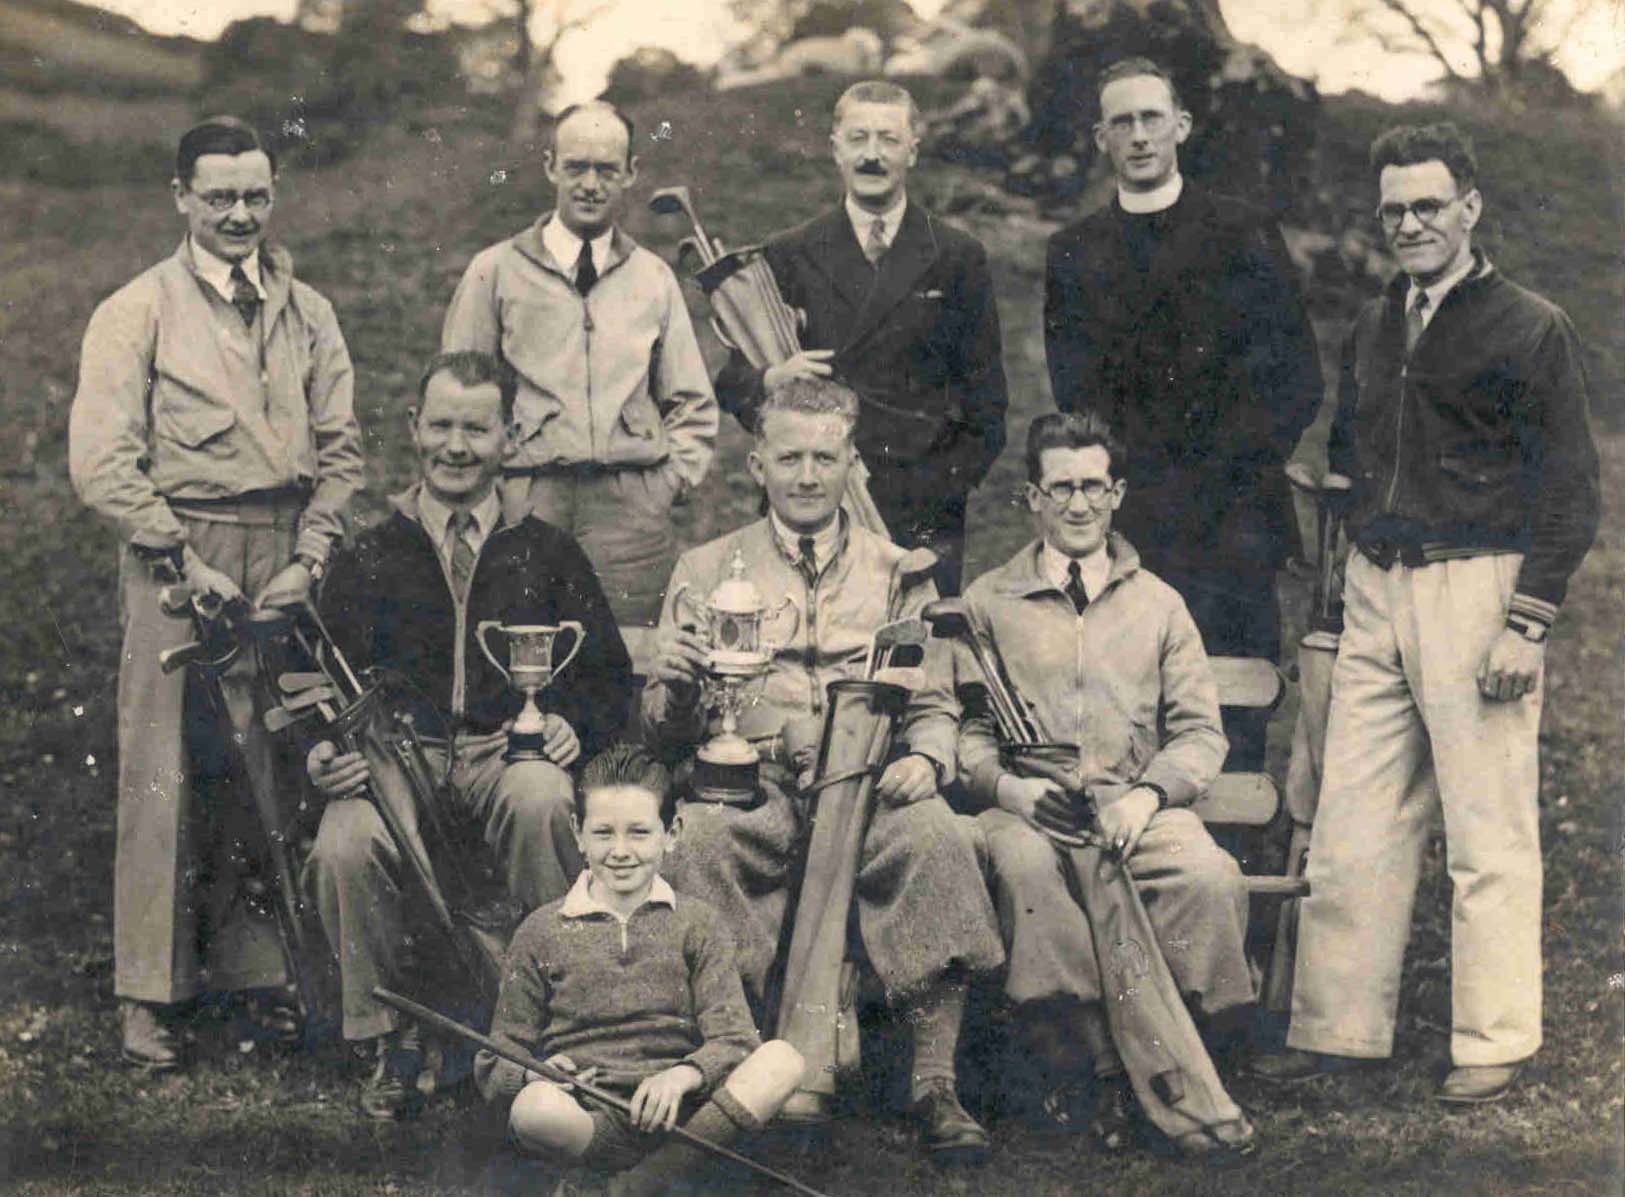 Group of golfers at Lismore Golf Club circa 1936 - 1940.